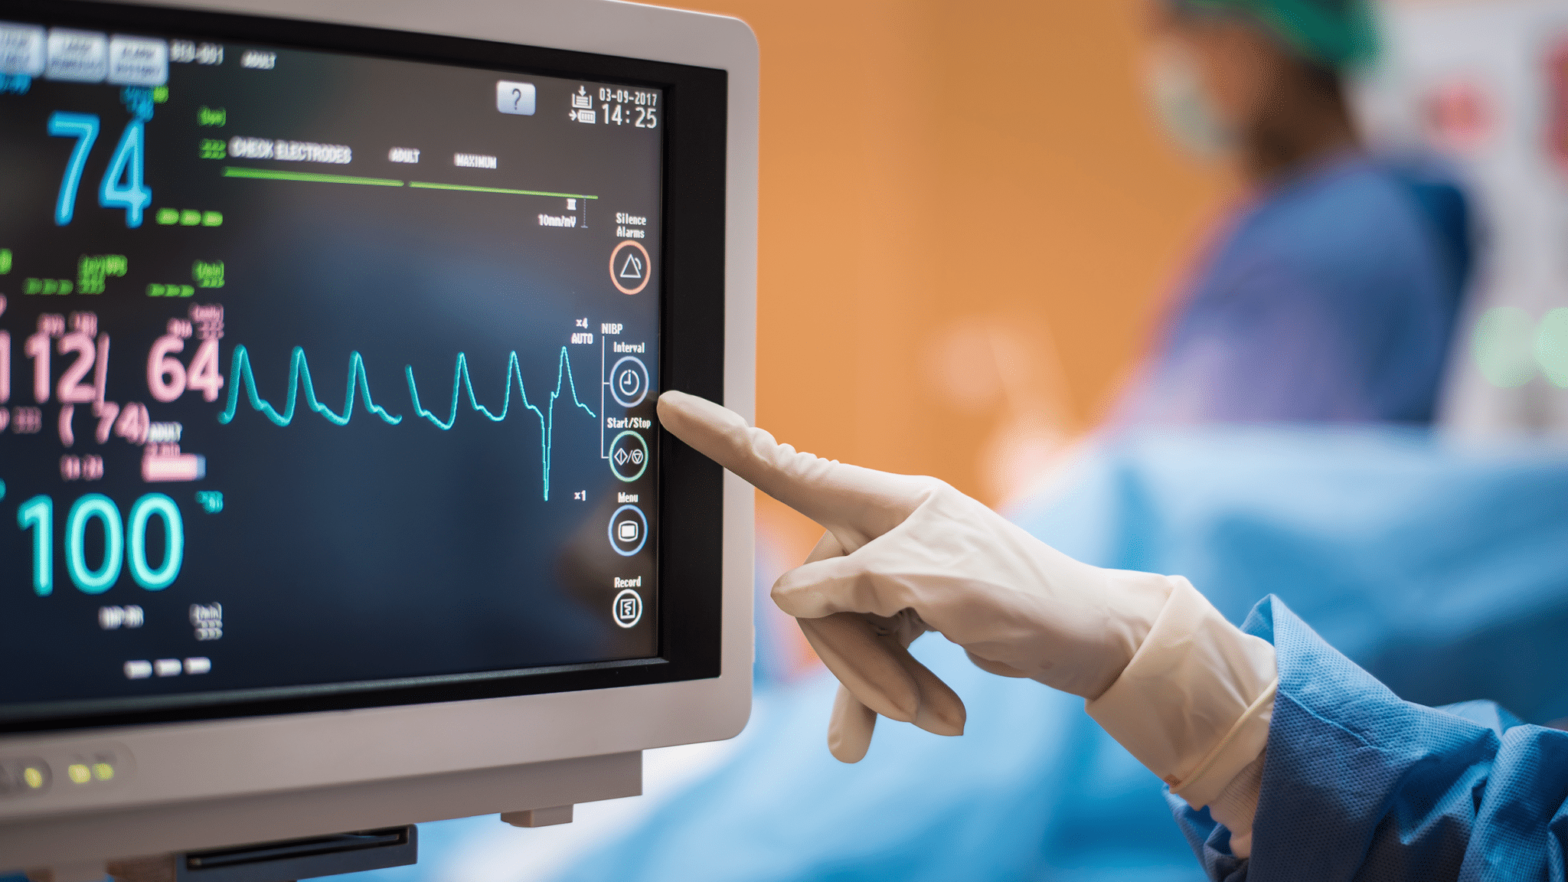 Cardiac Rhythm Remote Monitoring Devices Industry